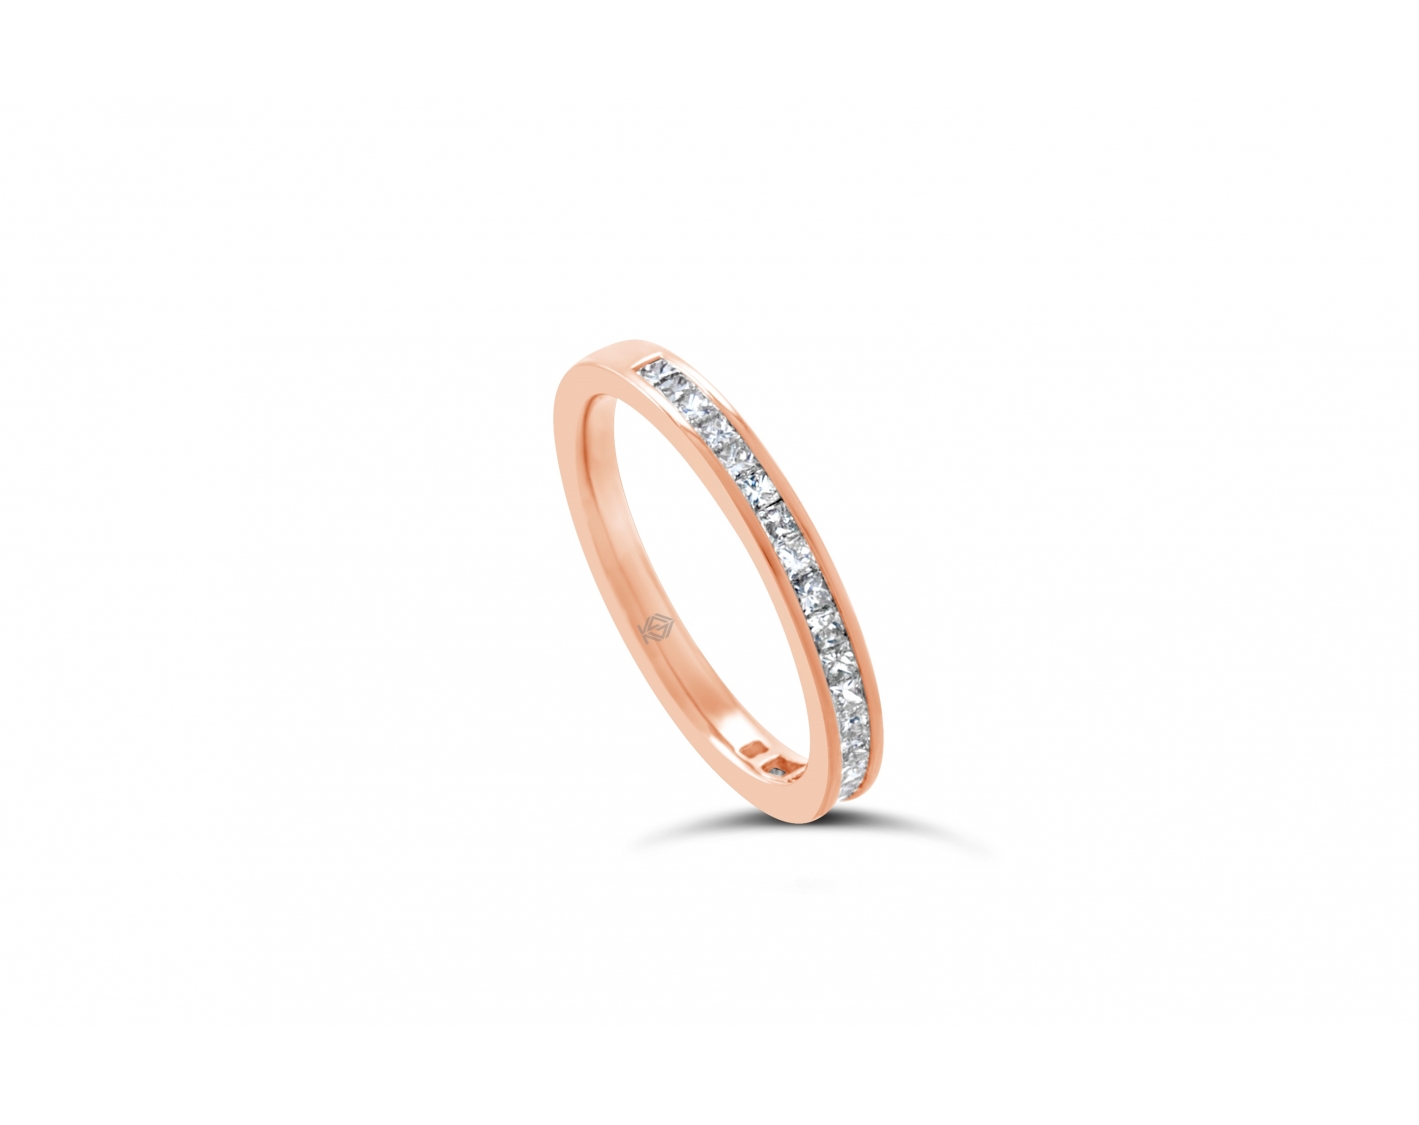 18k white gold half eternity channel set princess shaped diamond wedding ring Photos & images